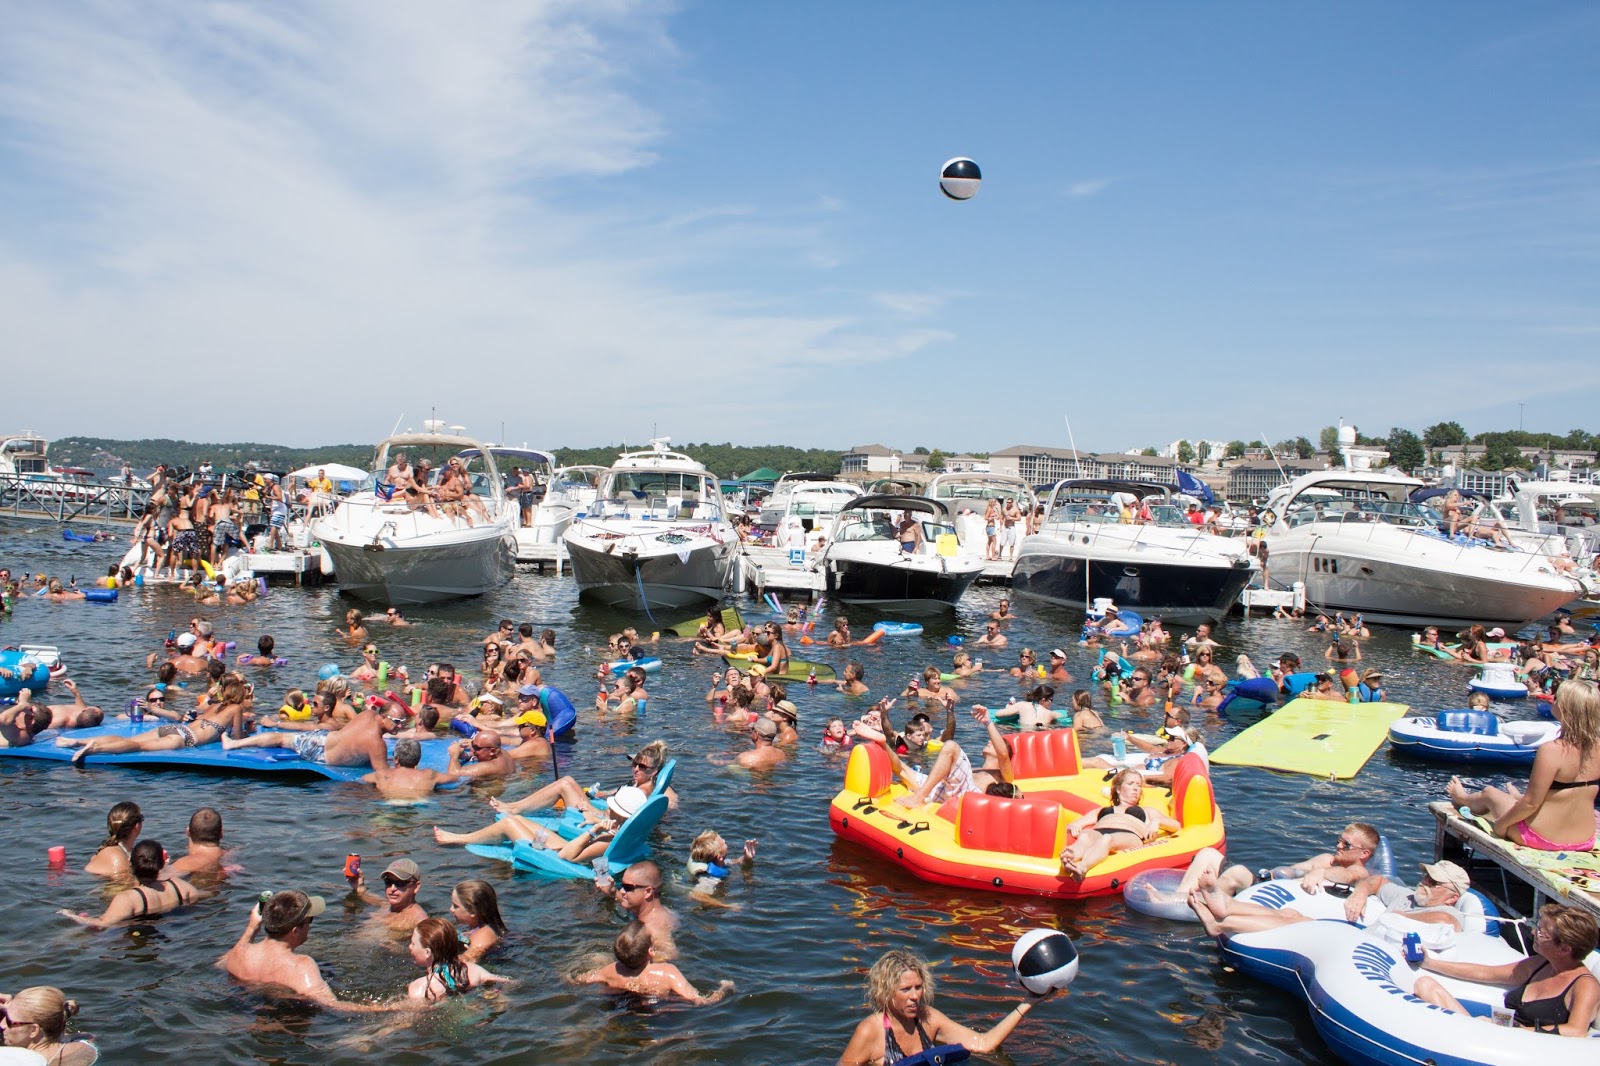 Summerset Inn Resort & Villas Summer Events at Lake of the Ozarks You